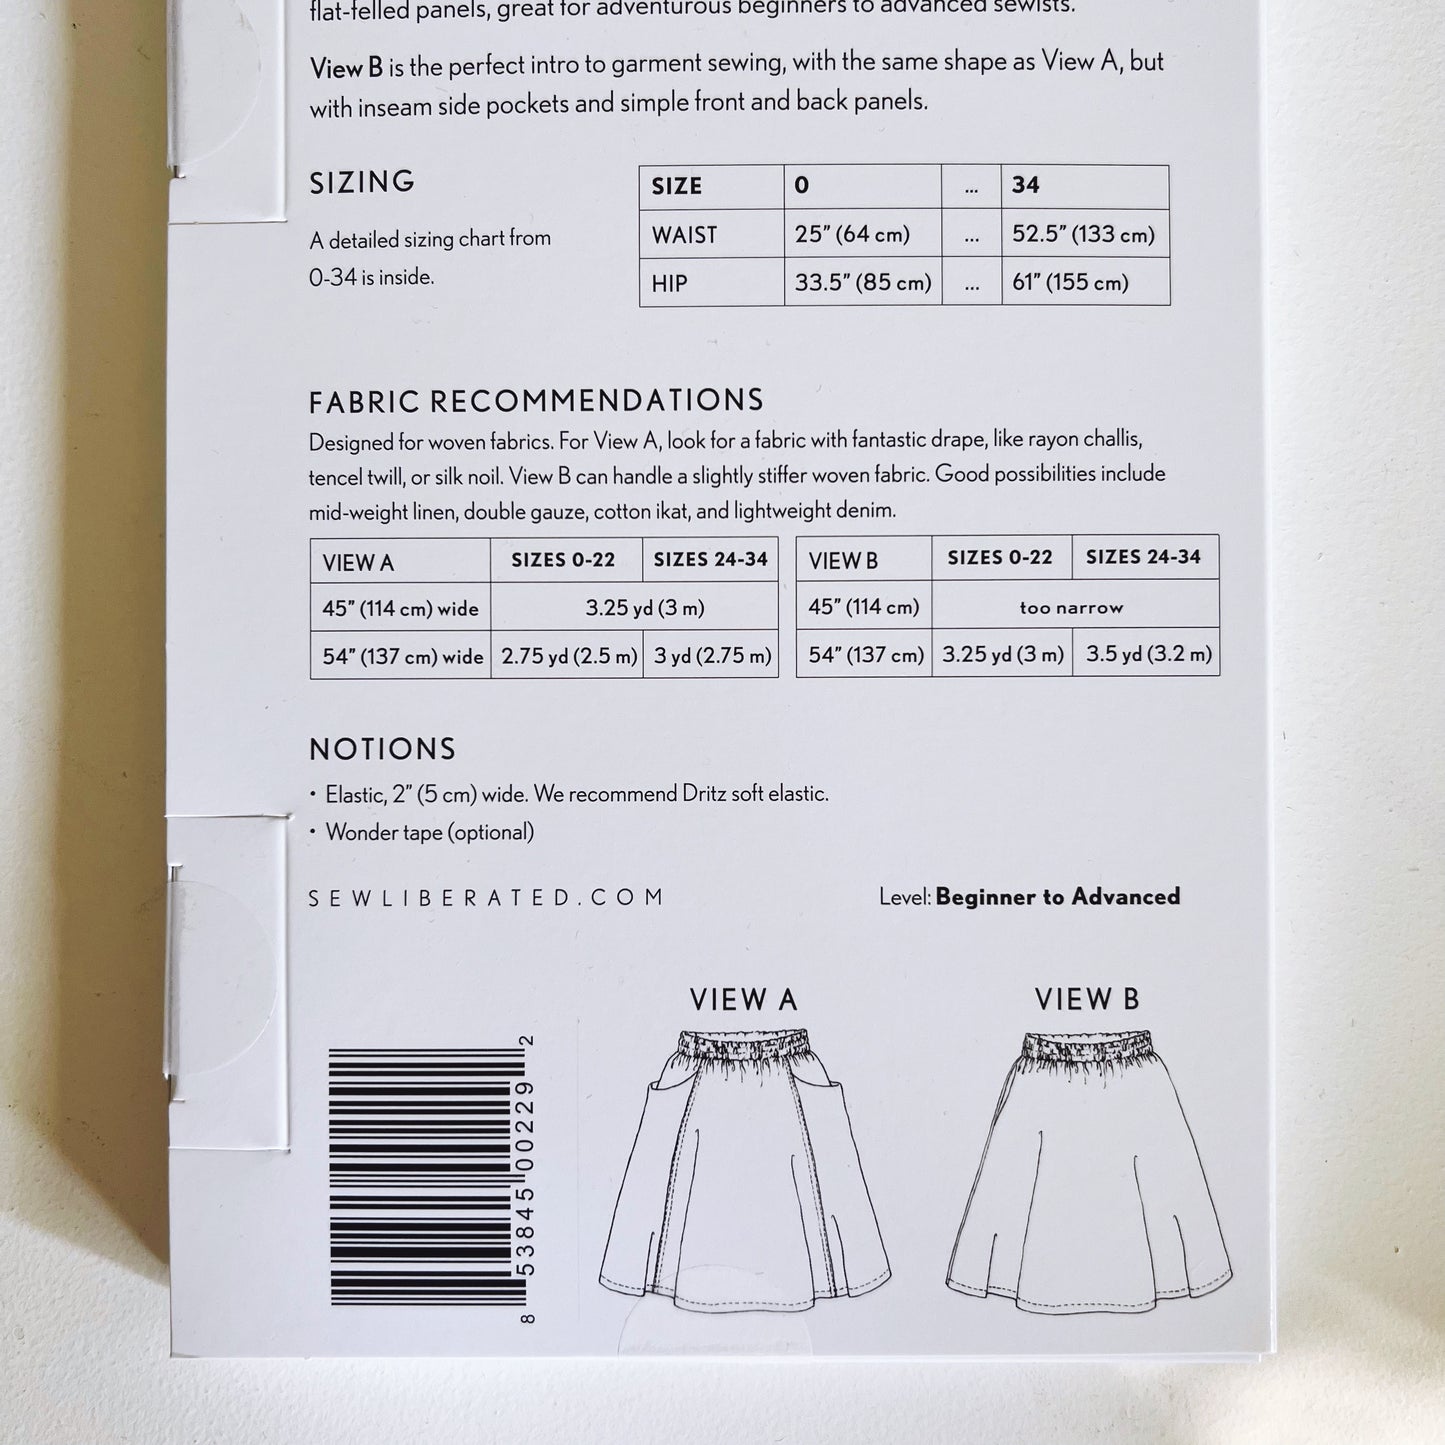 Gypsum Skirt Sewing Paper Pattern